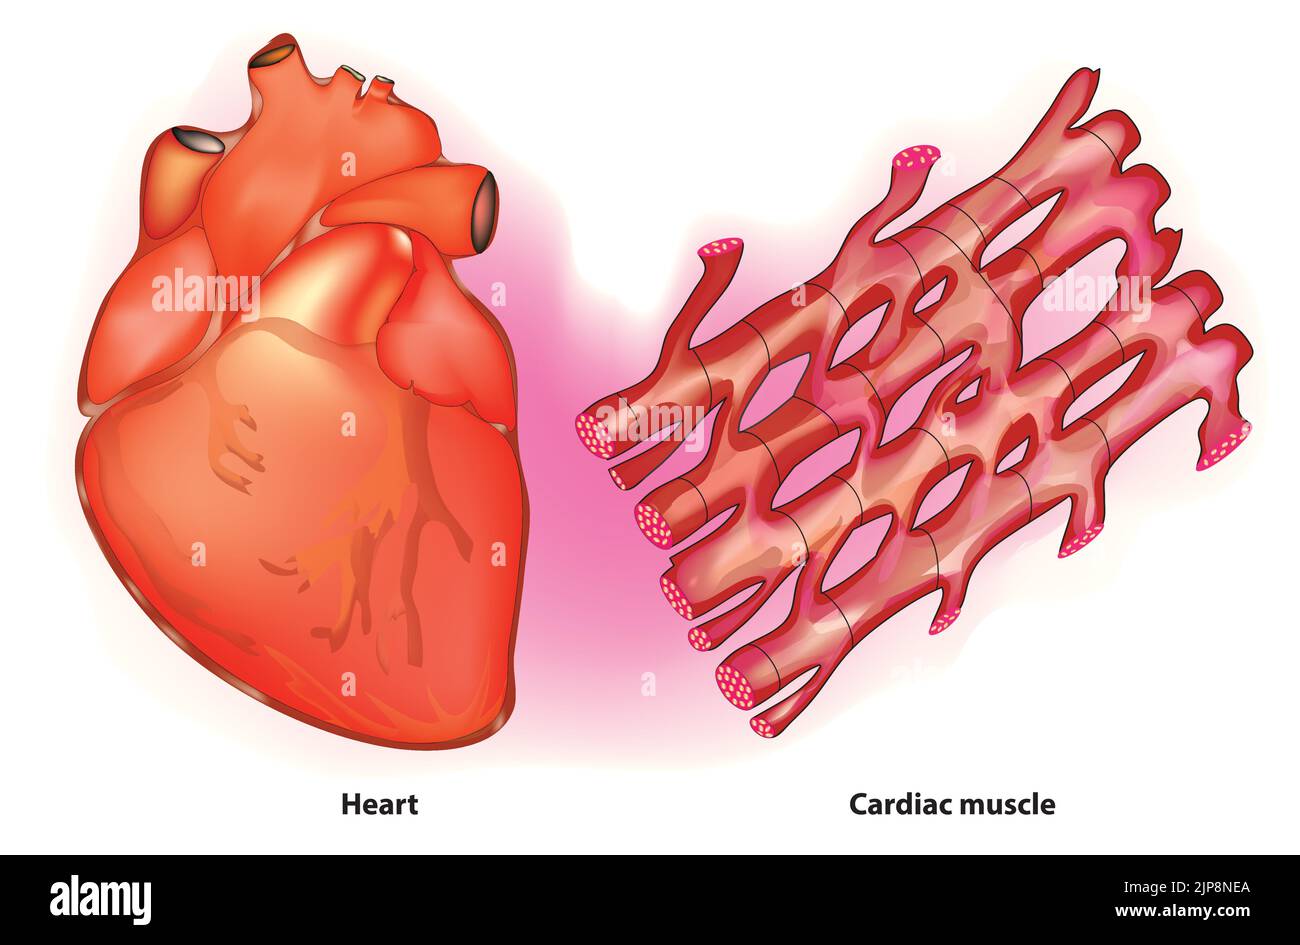 Heart anatomy and cardiac muscle tissue Stock Vector